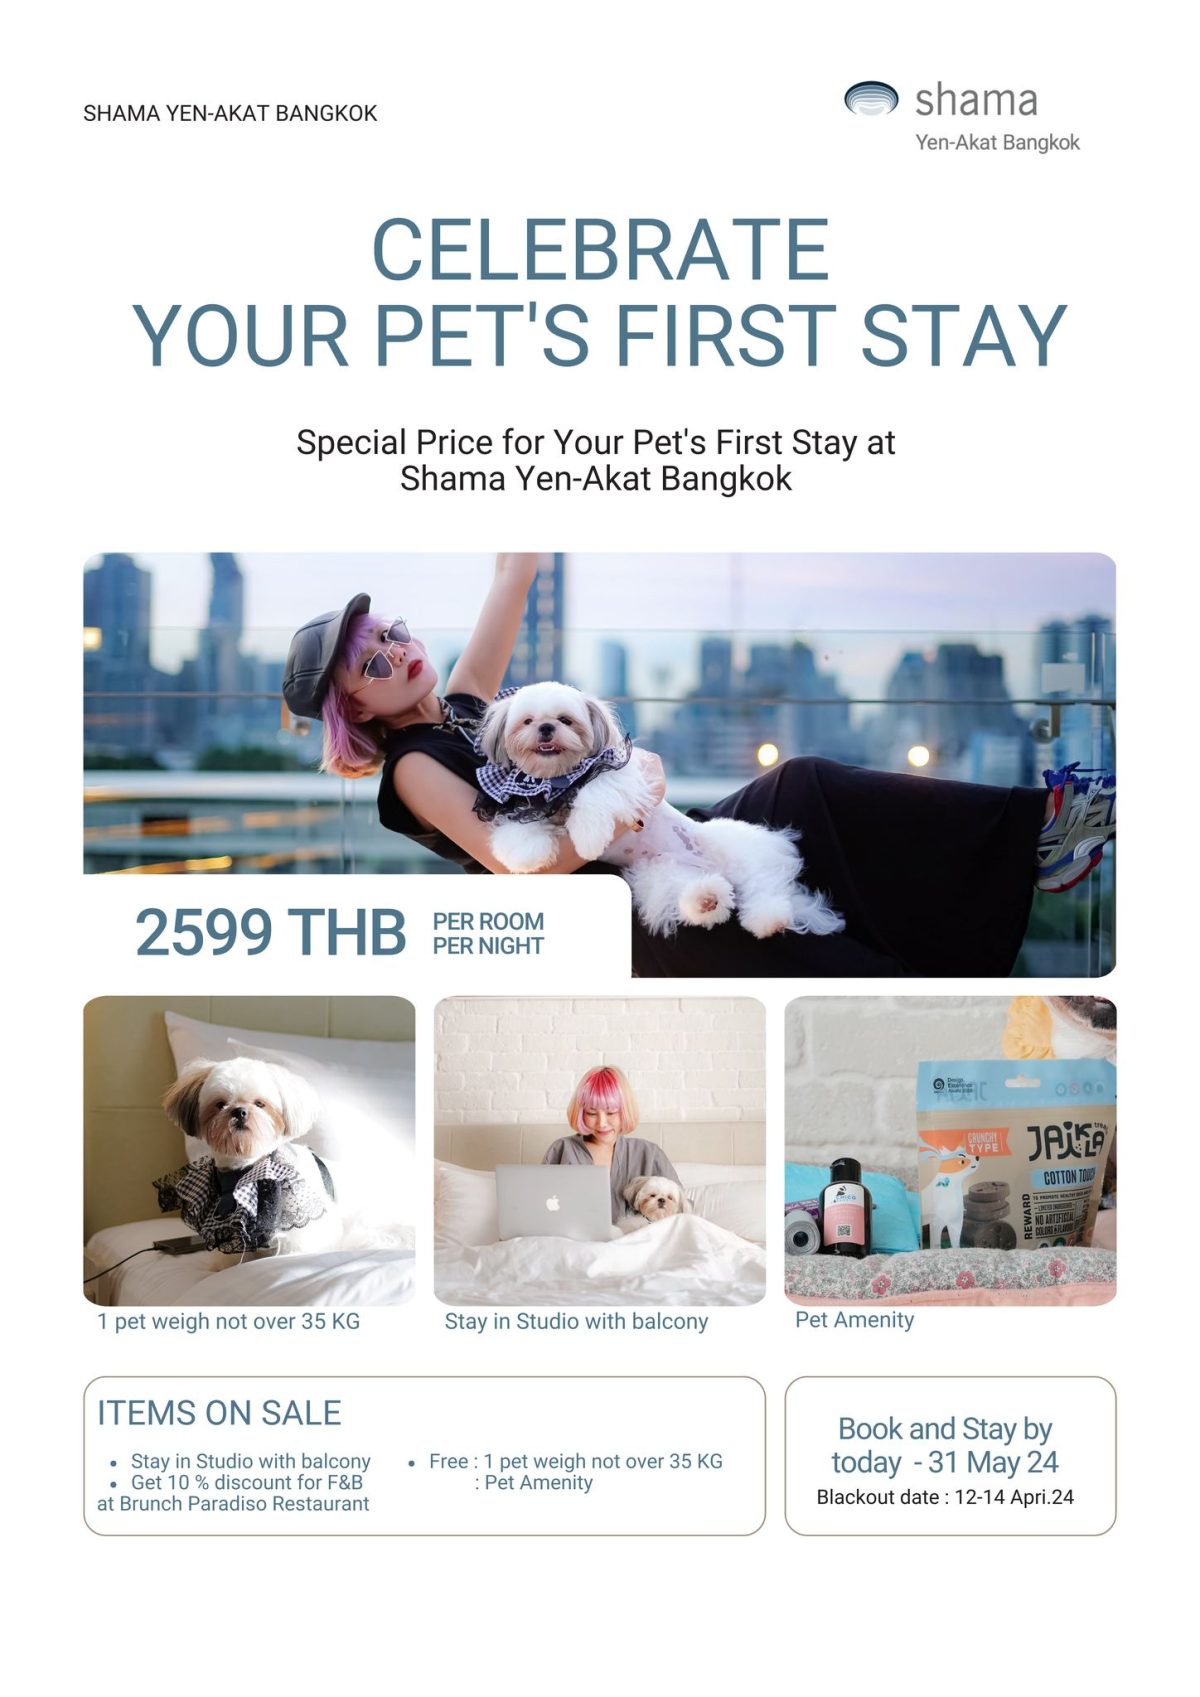 Pet Friendly Package: Special Price for Your Pet's First Stay โปรแรงต้อนรับซัมเมอร์สำหรับการเข้าพักครั้งแรกกับแพคเก็จพิเศษเอาใจคนรักสัตว์ เพียง 2,599 บาท ต่อ 1 คืน